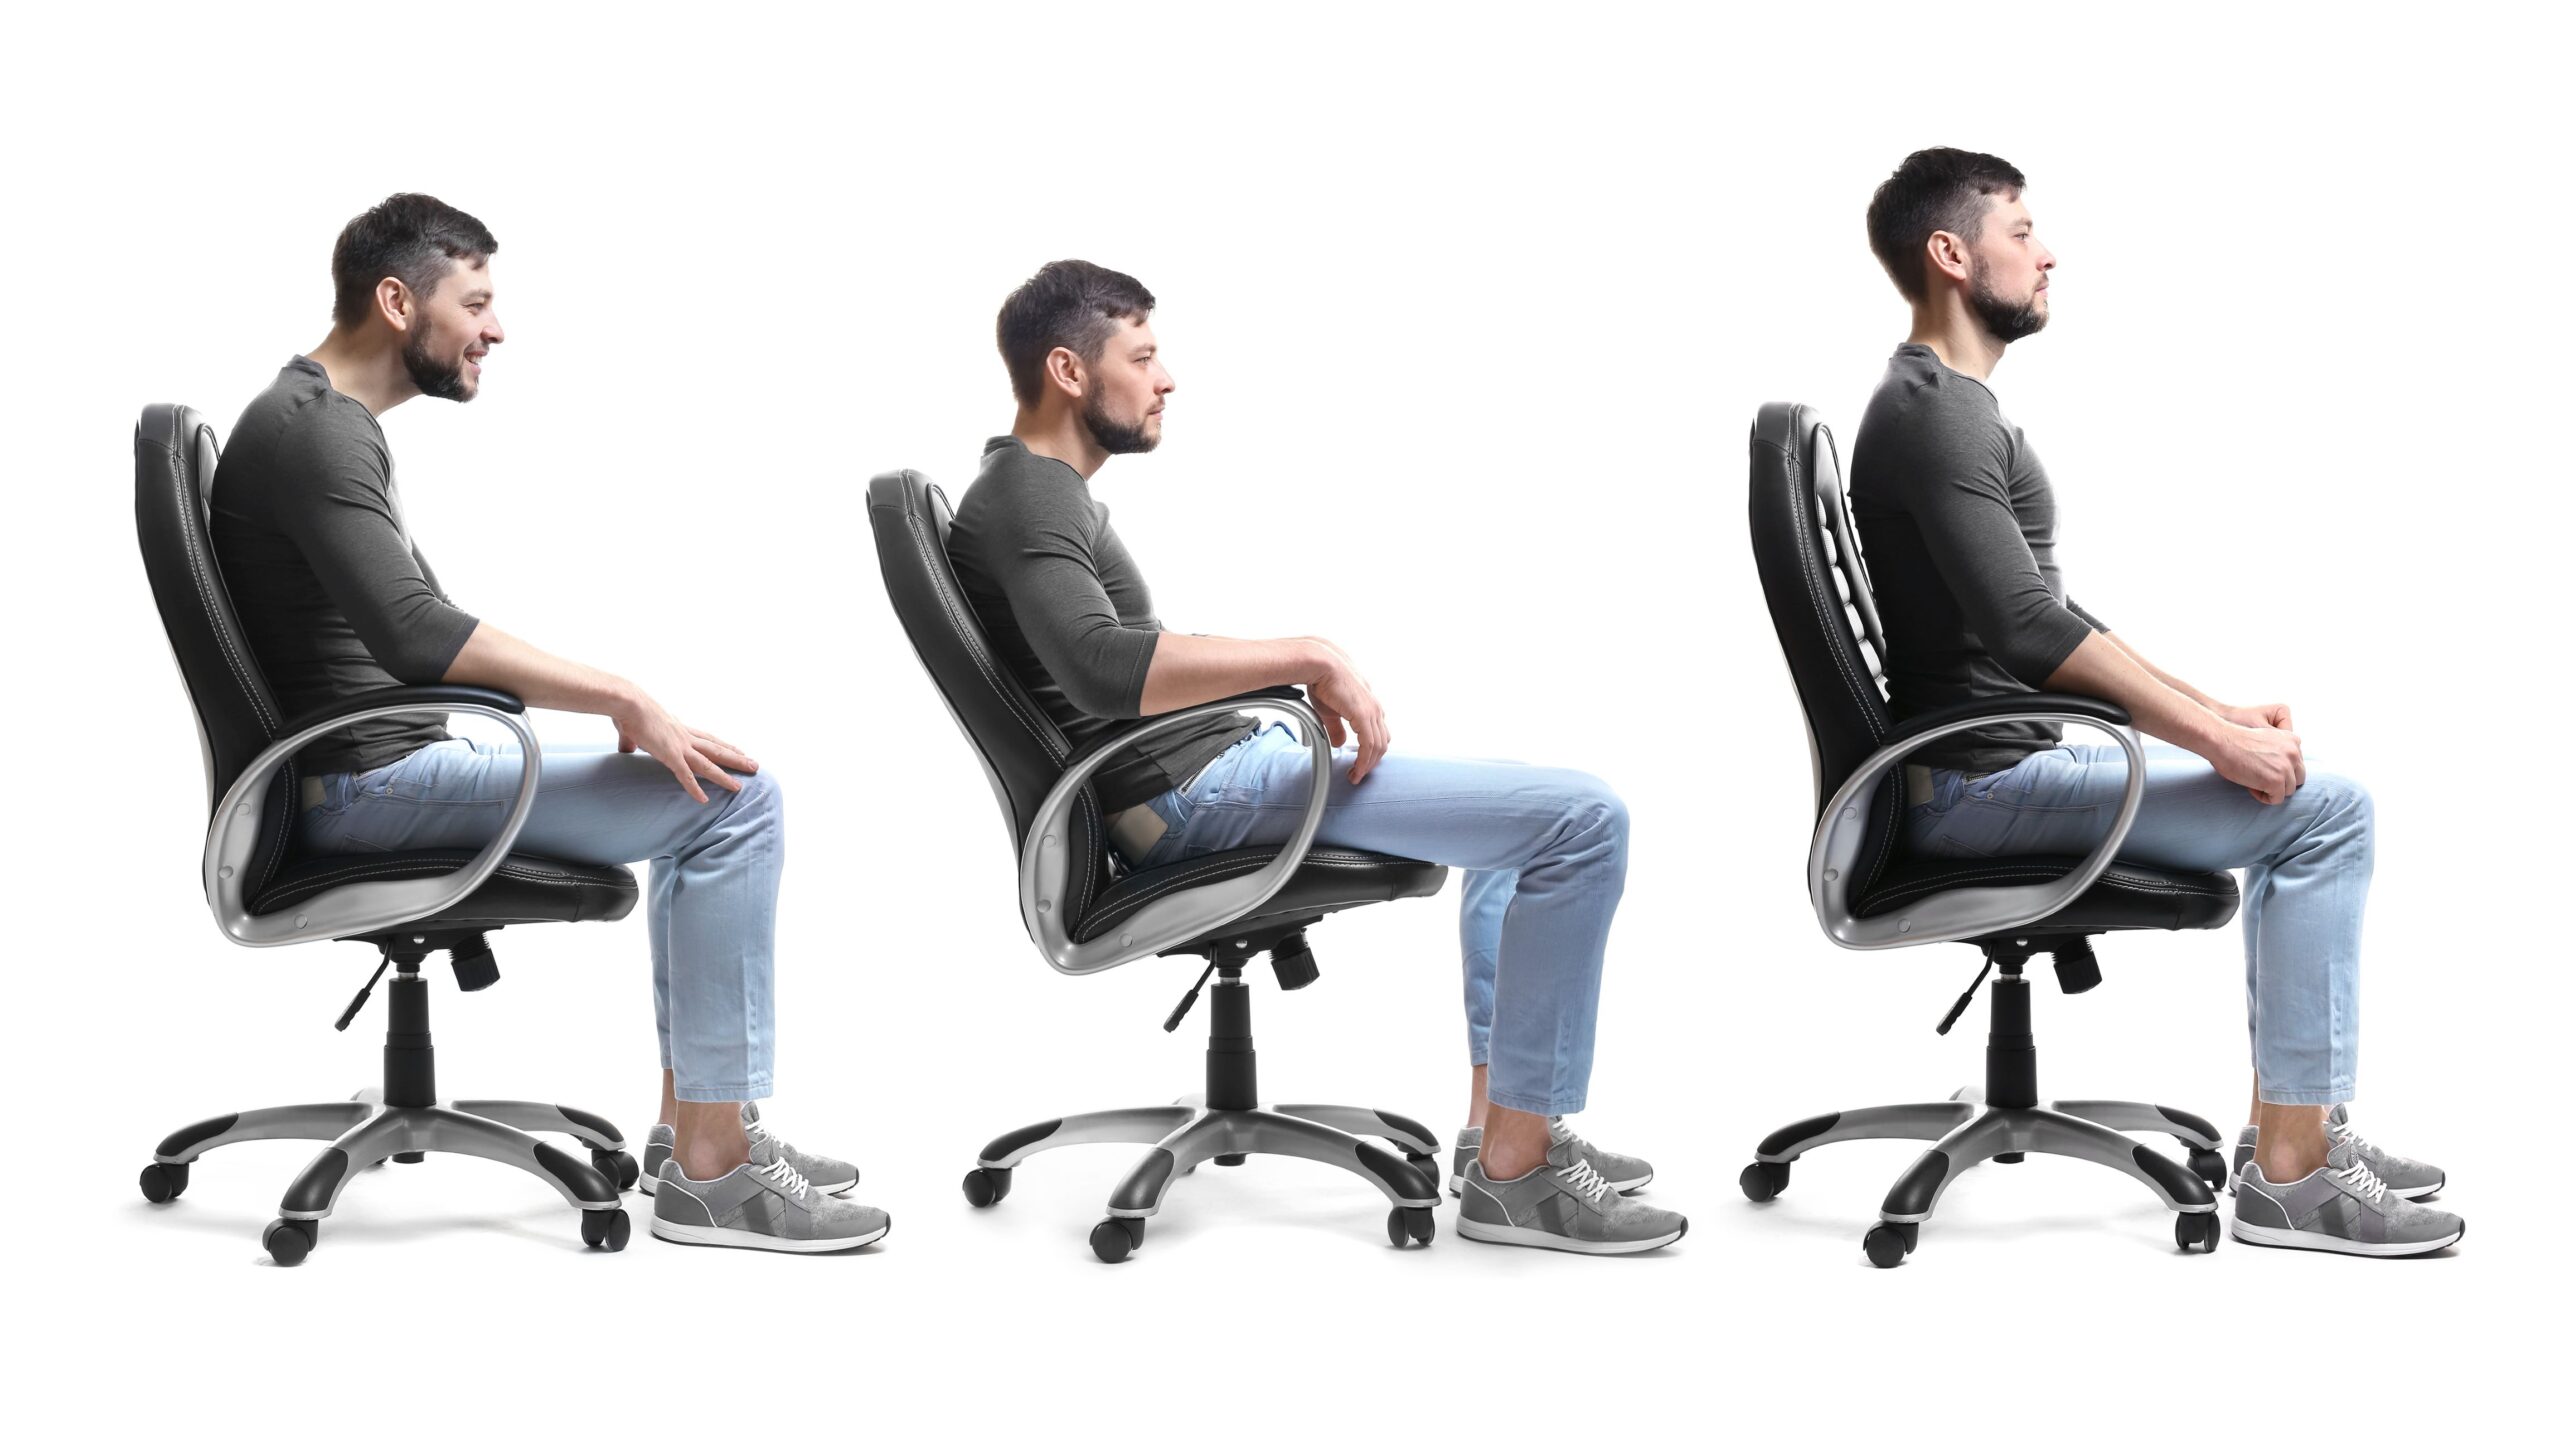 Sitting posture